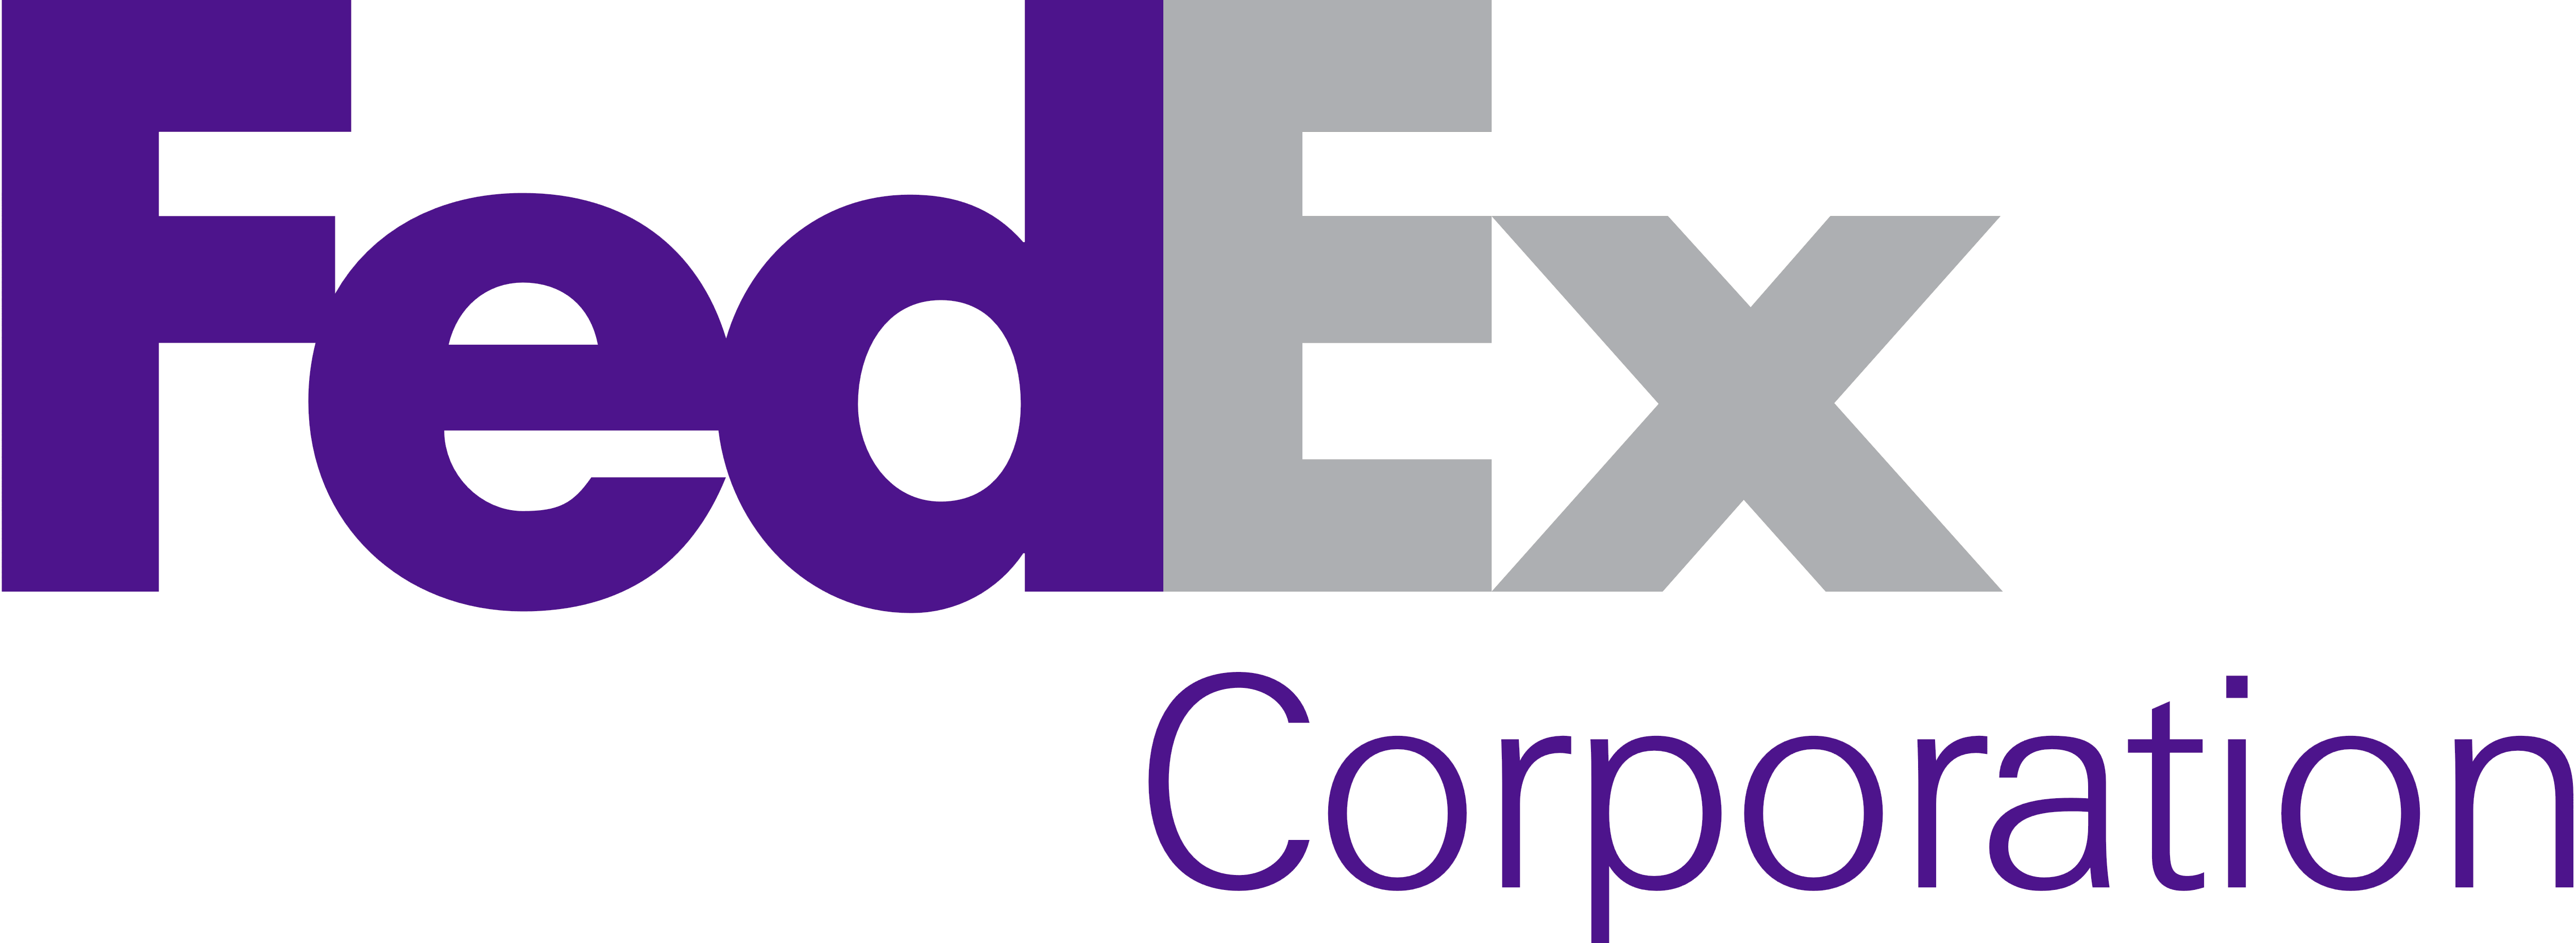 Federal Express Corporation Logo - Fedex Corporation PNG Transparent Fedex Corporation.PNG Images ...